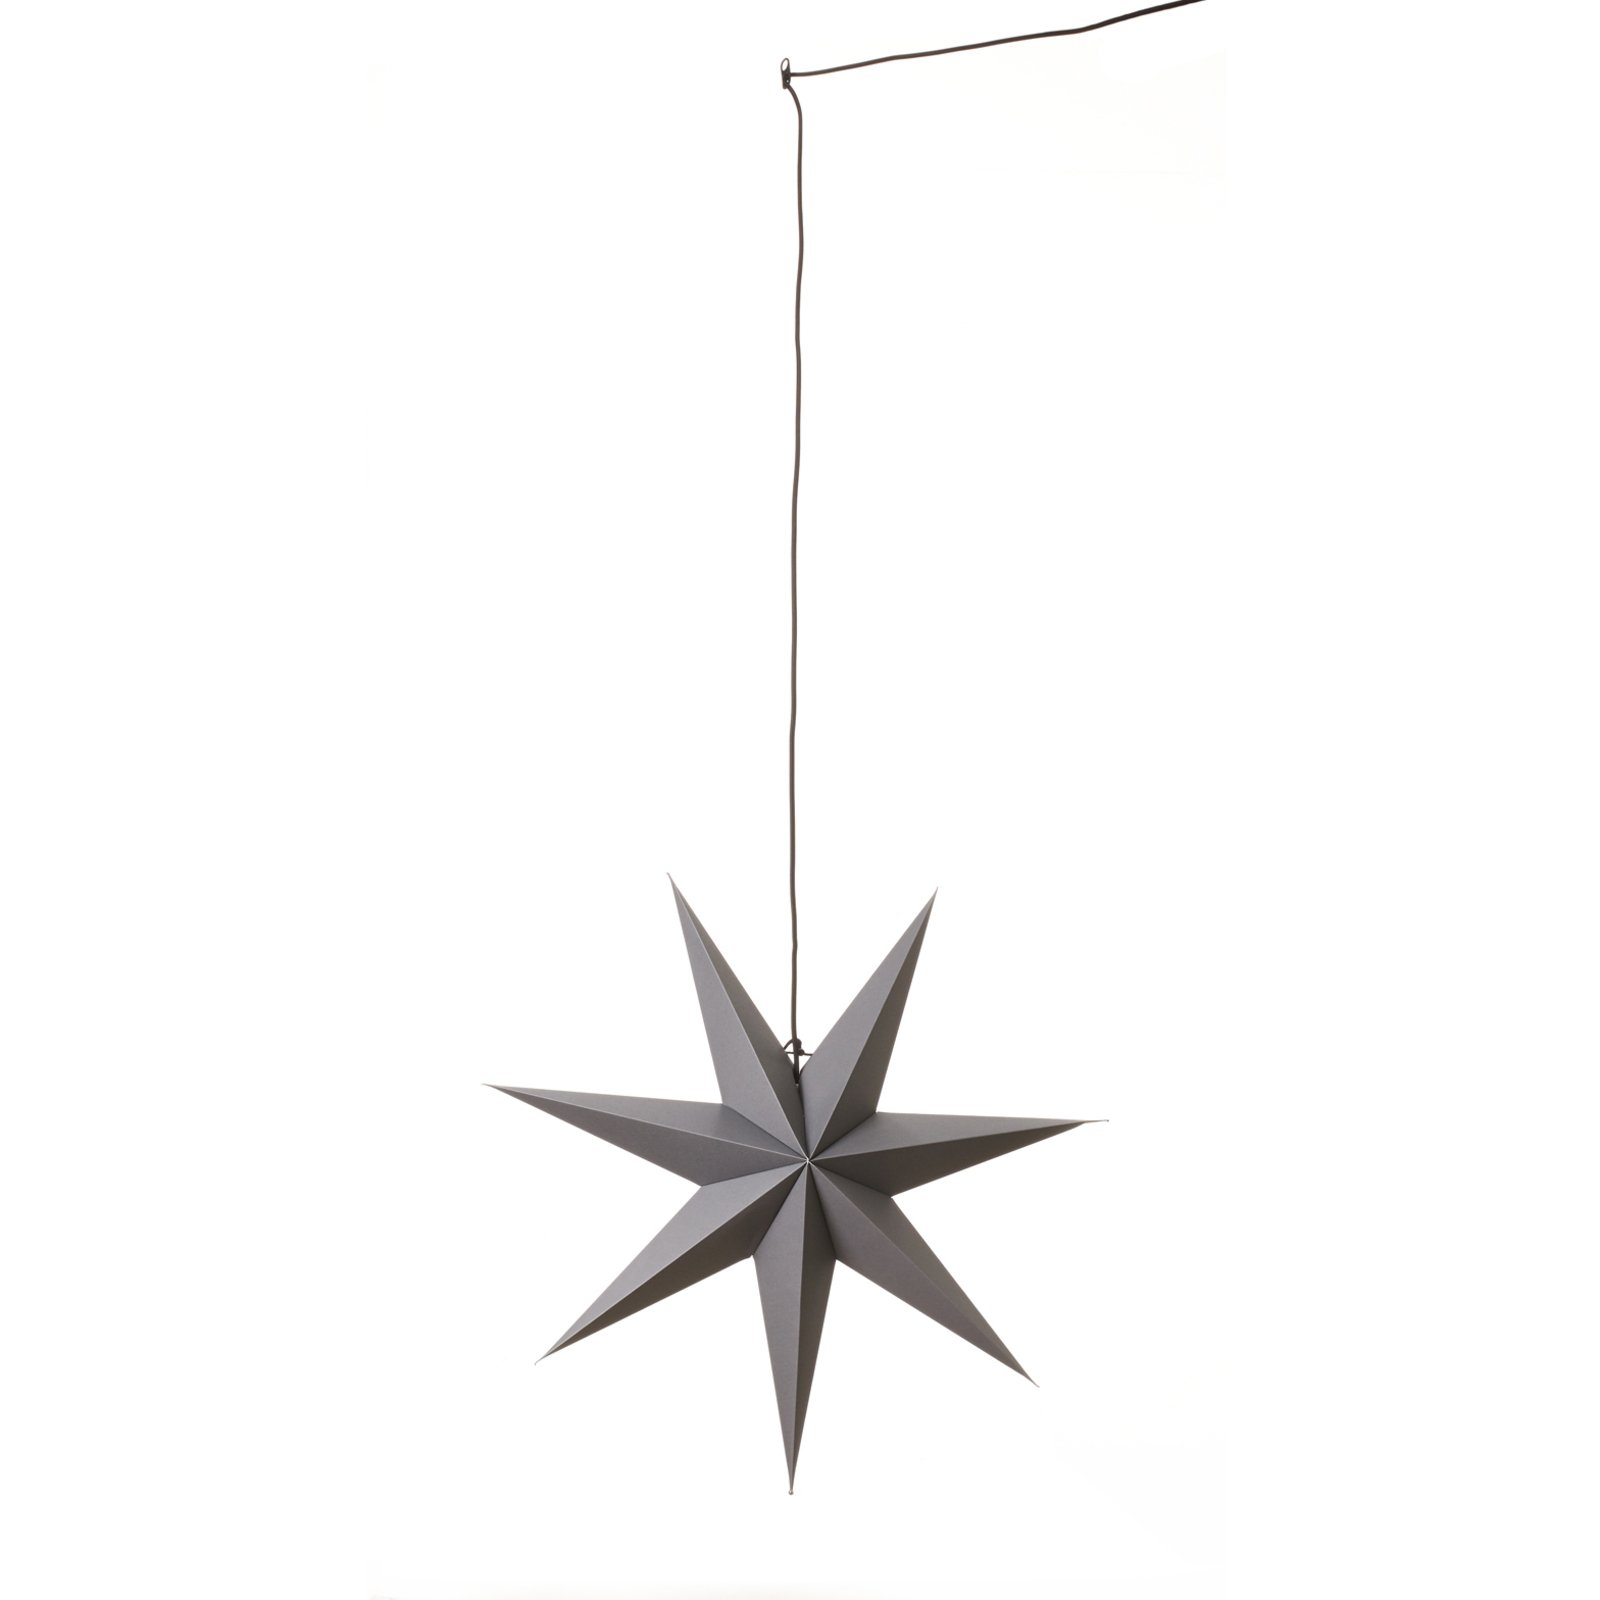 Ozen seven-pointed paper star, 70 cm diameter